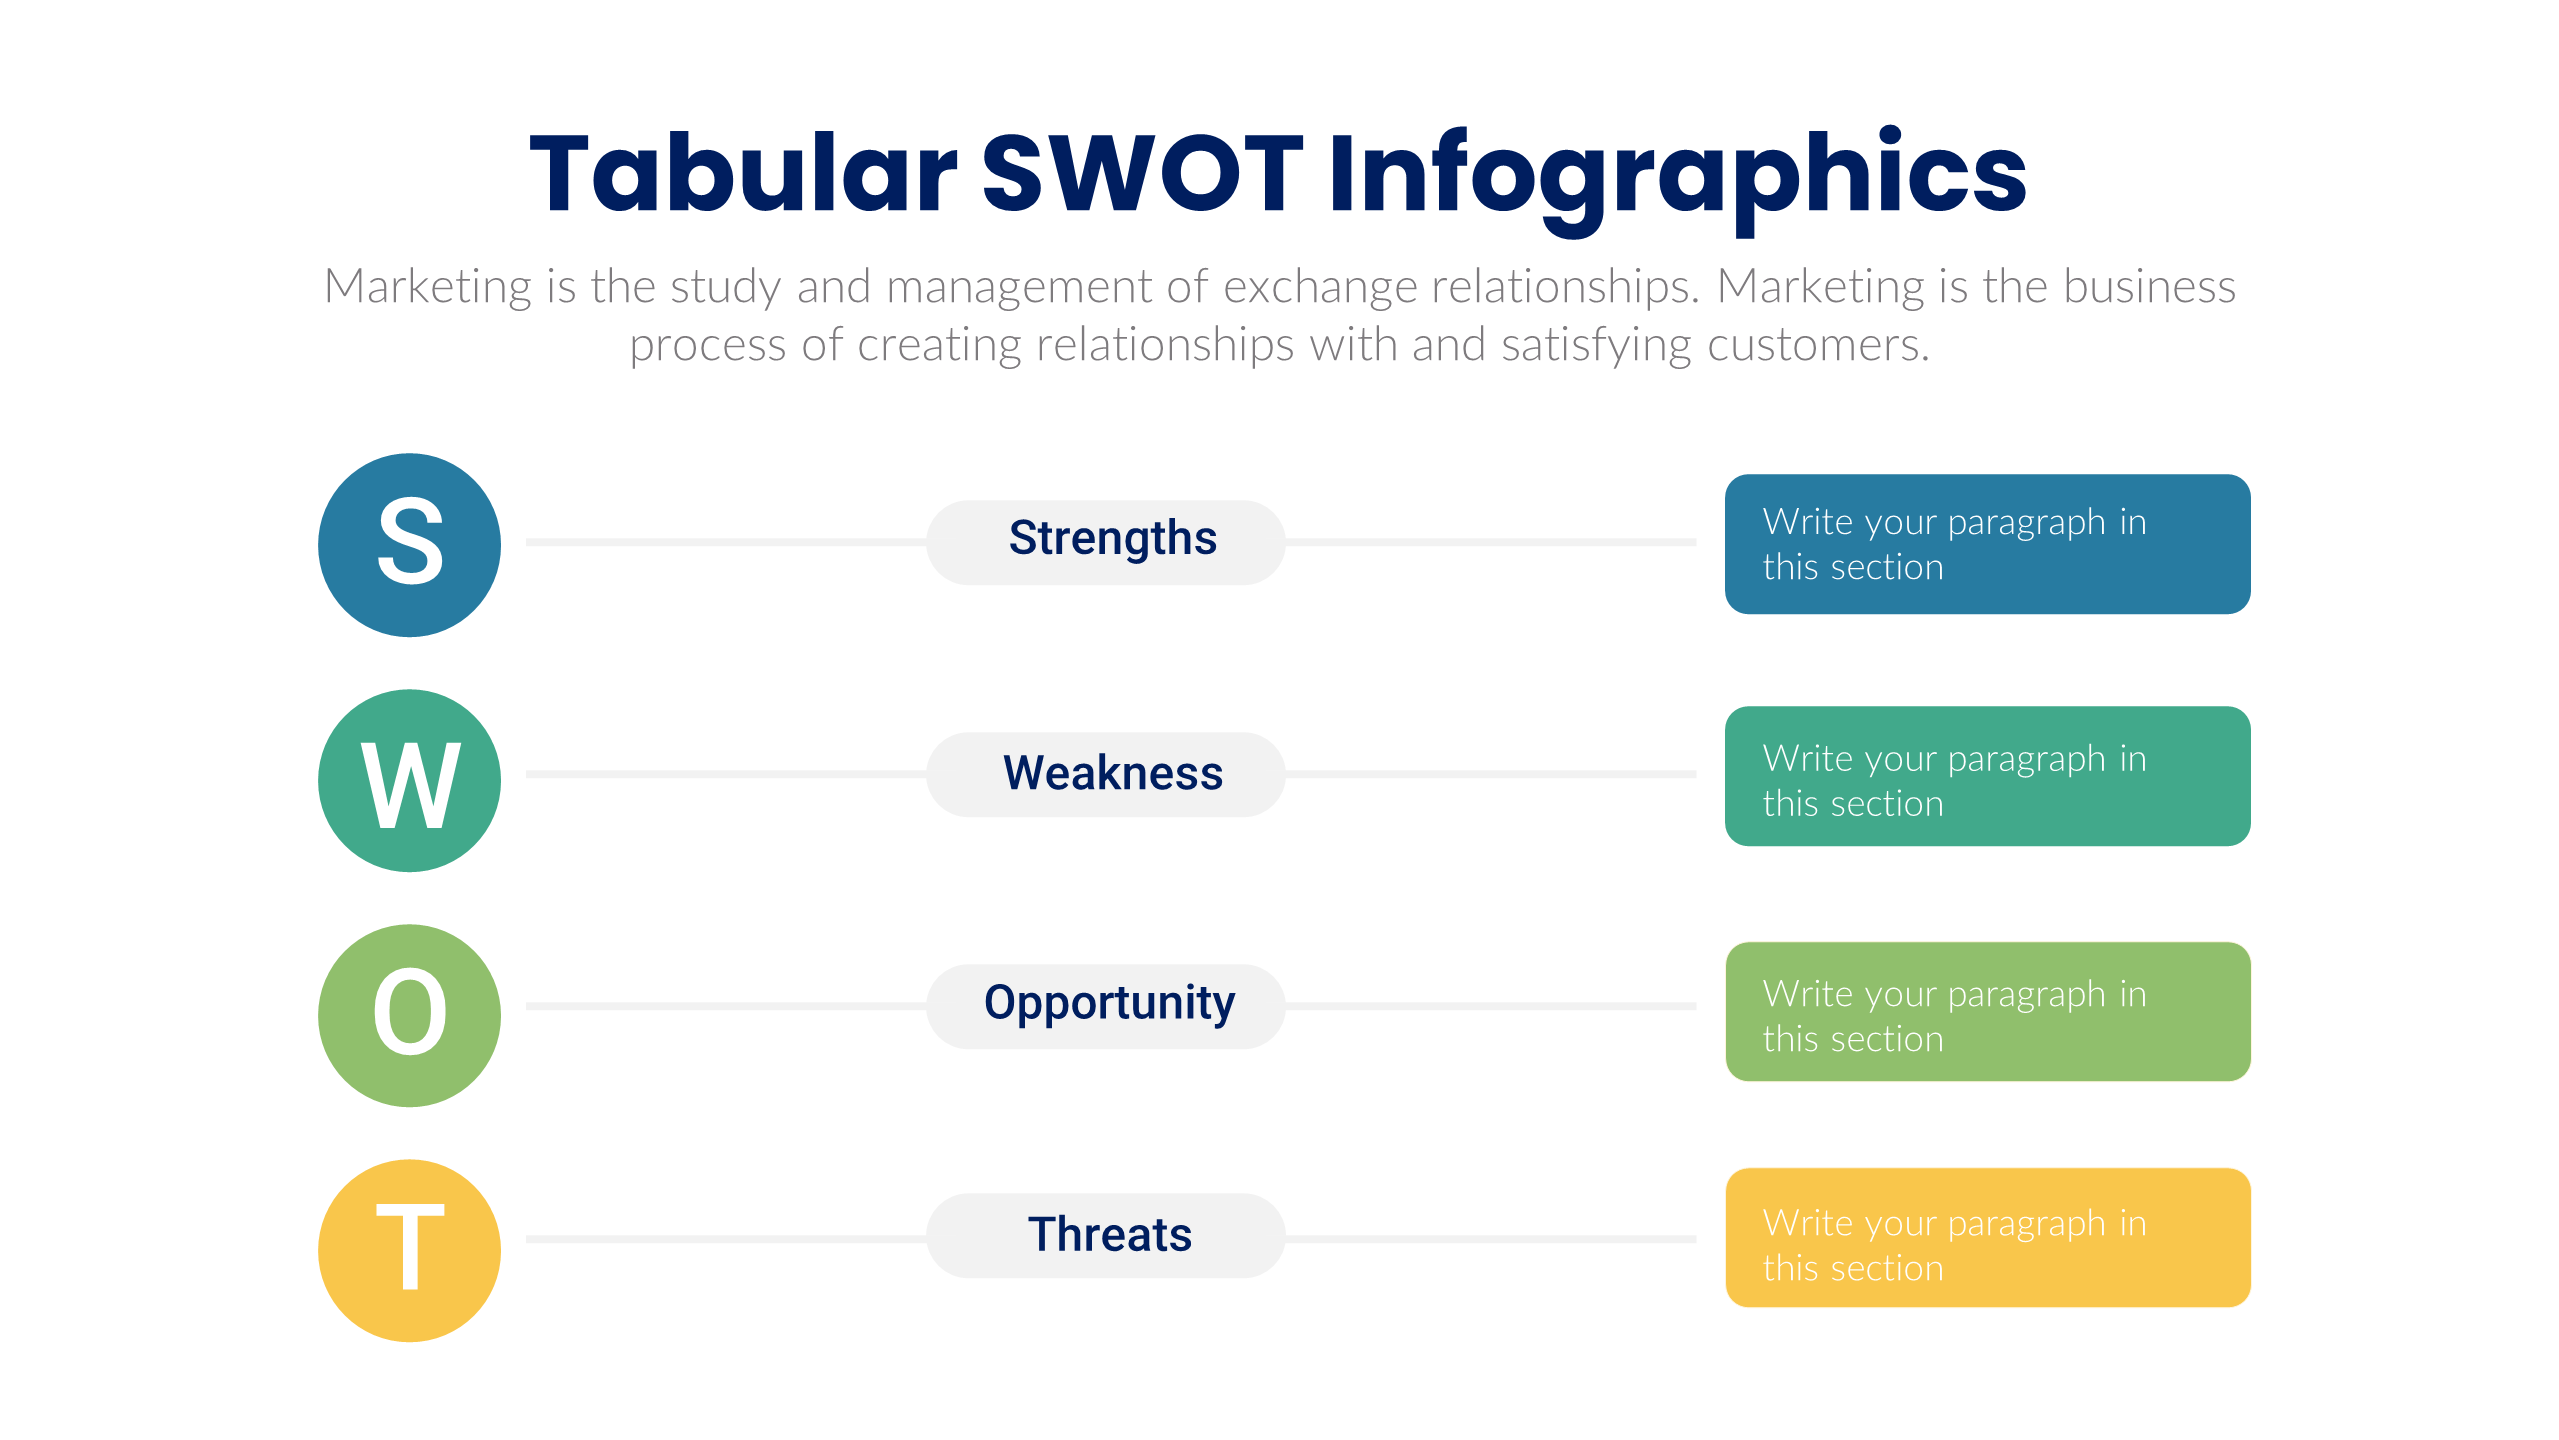 SWOT Analysis Diagram